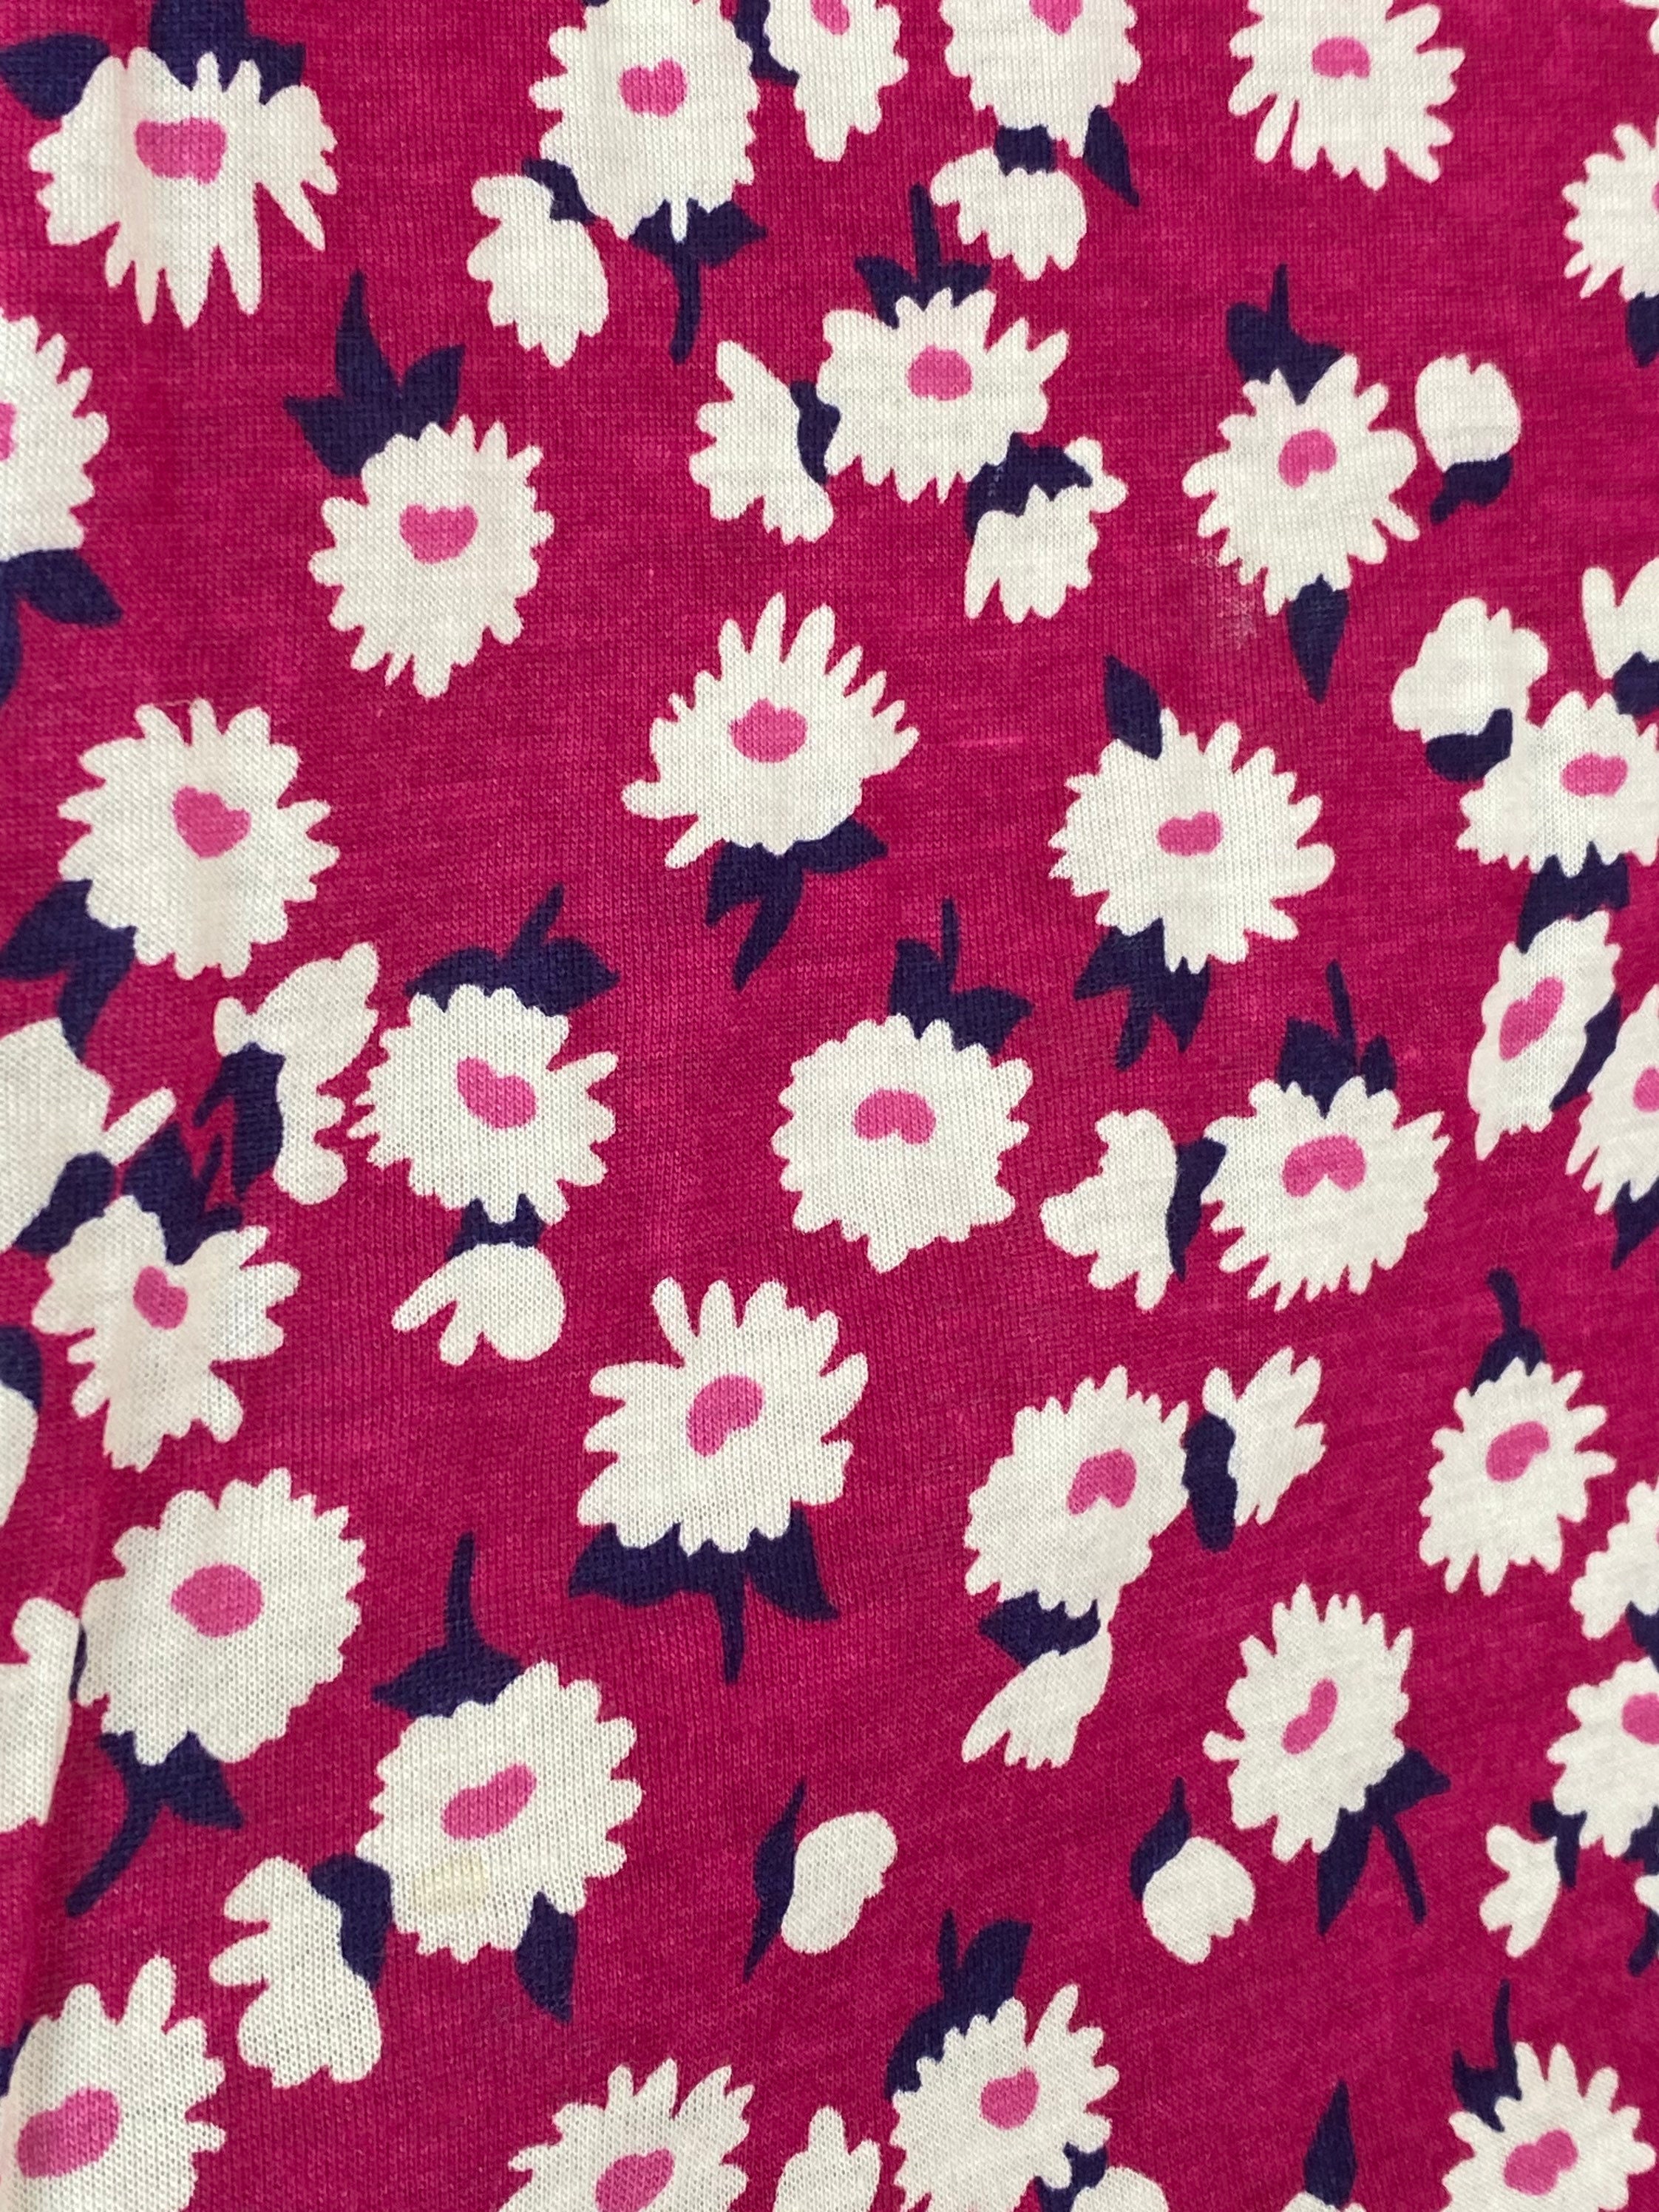 Small Flower Cotton Jersey Fabric Daisy Cotton Jersey Knit Fabric -   Israel